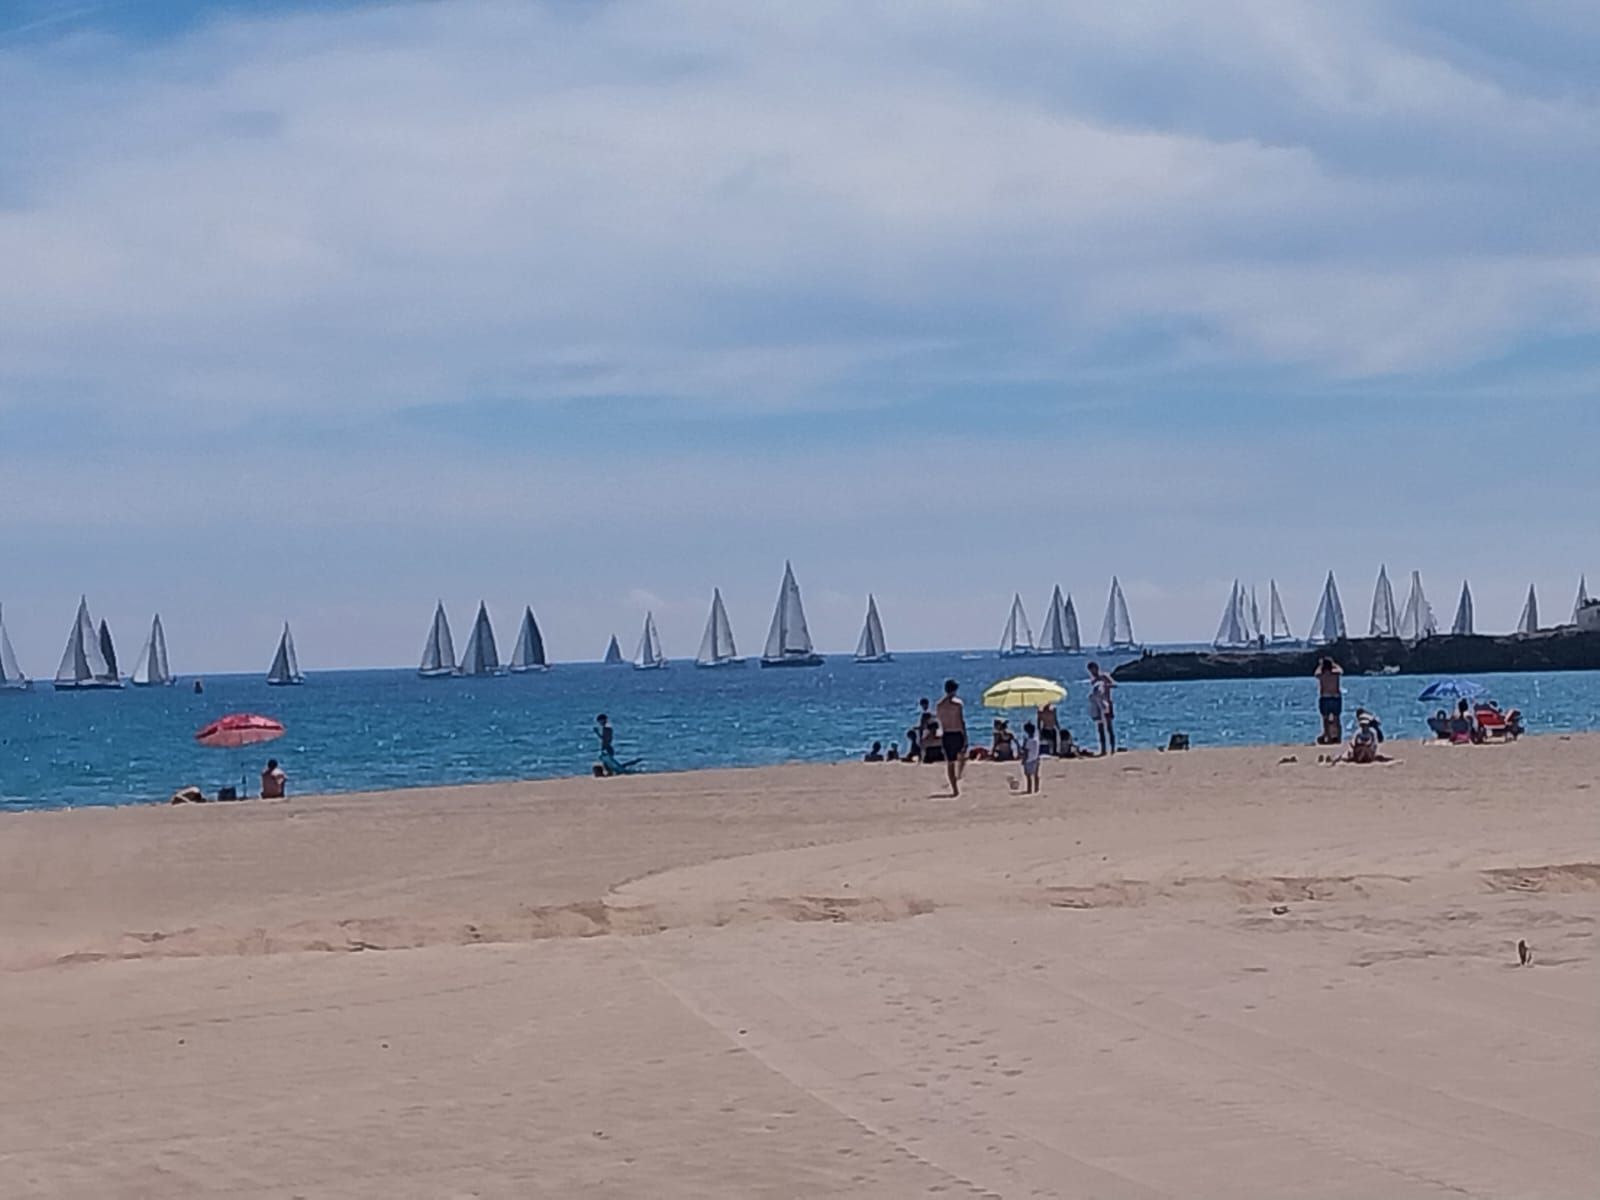 La playa del Arenal de Xàbia, a toda vela (imágenes)